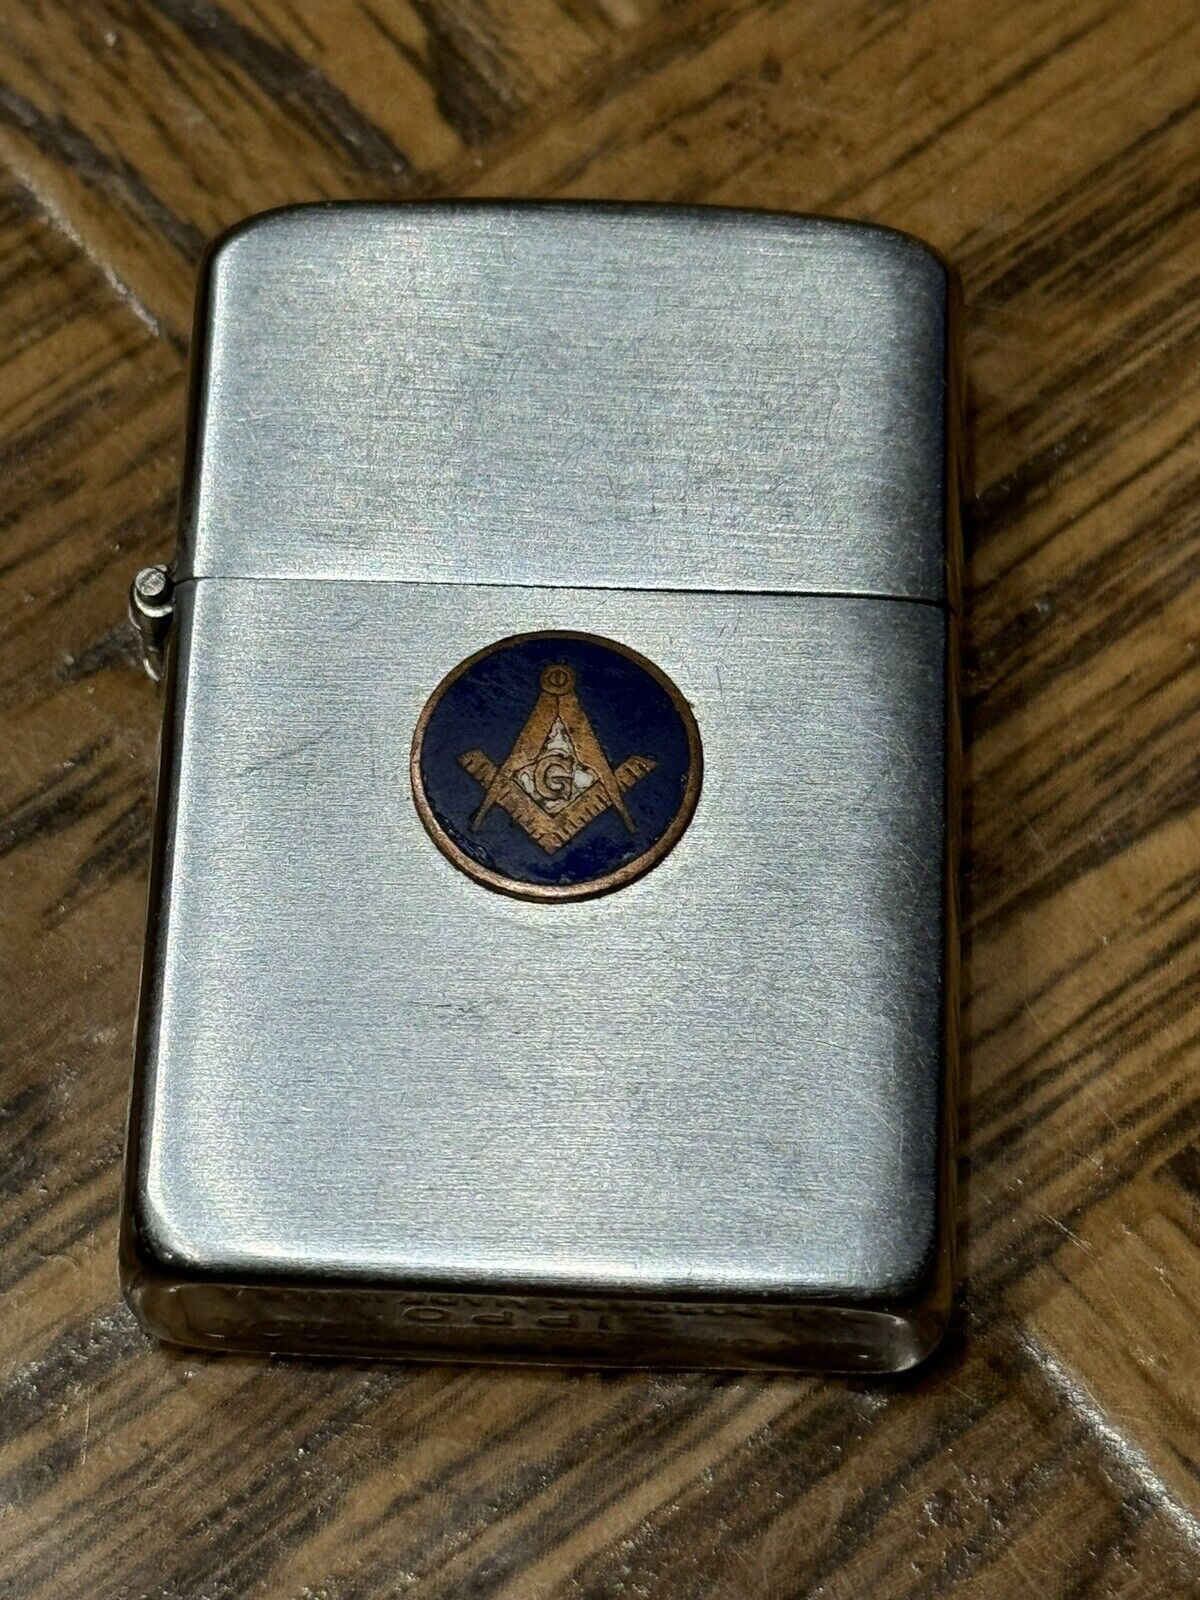 1940s Vintage zippo freemason Lighter  2032695 16 HOLE INSERT FRATERNAL